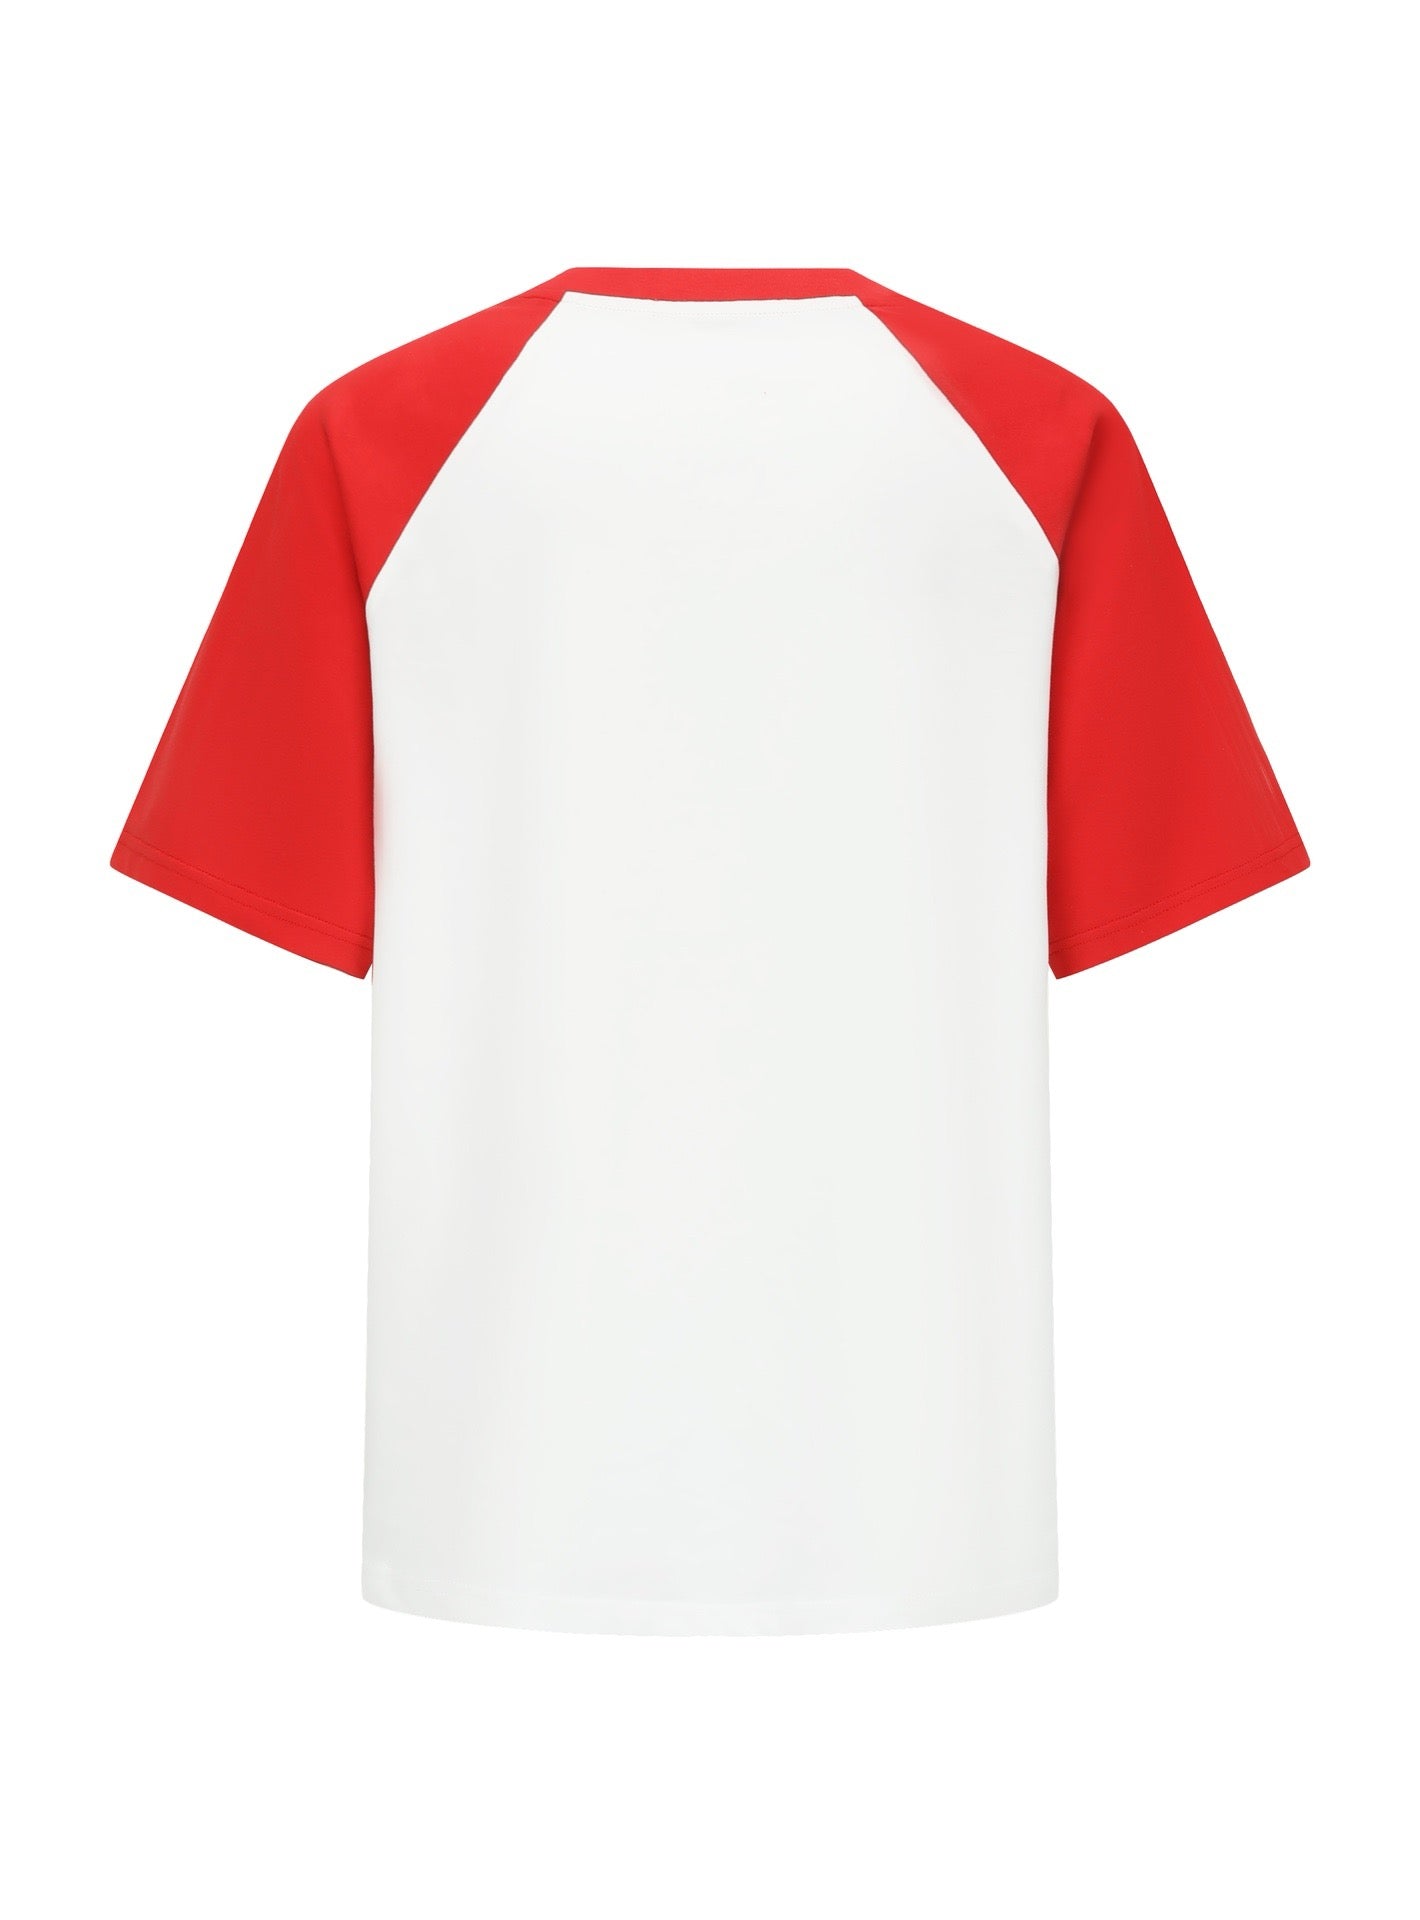 Alexia Sandra Four Bunnies Contrast Color Raglan T-Shirt Red/White